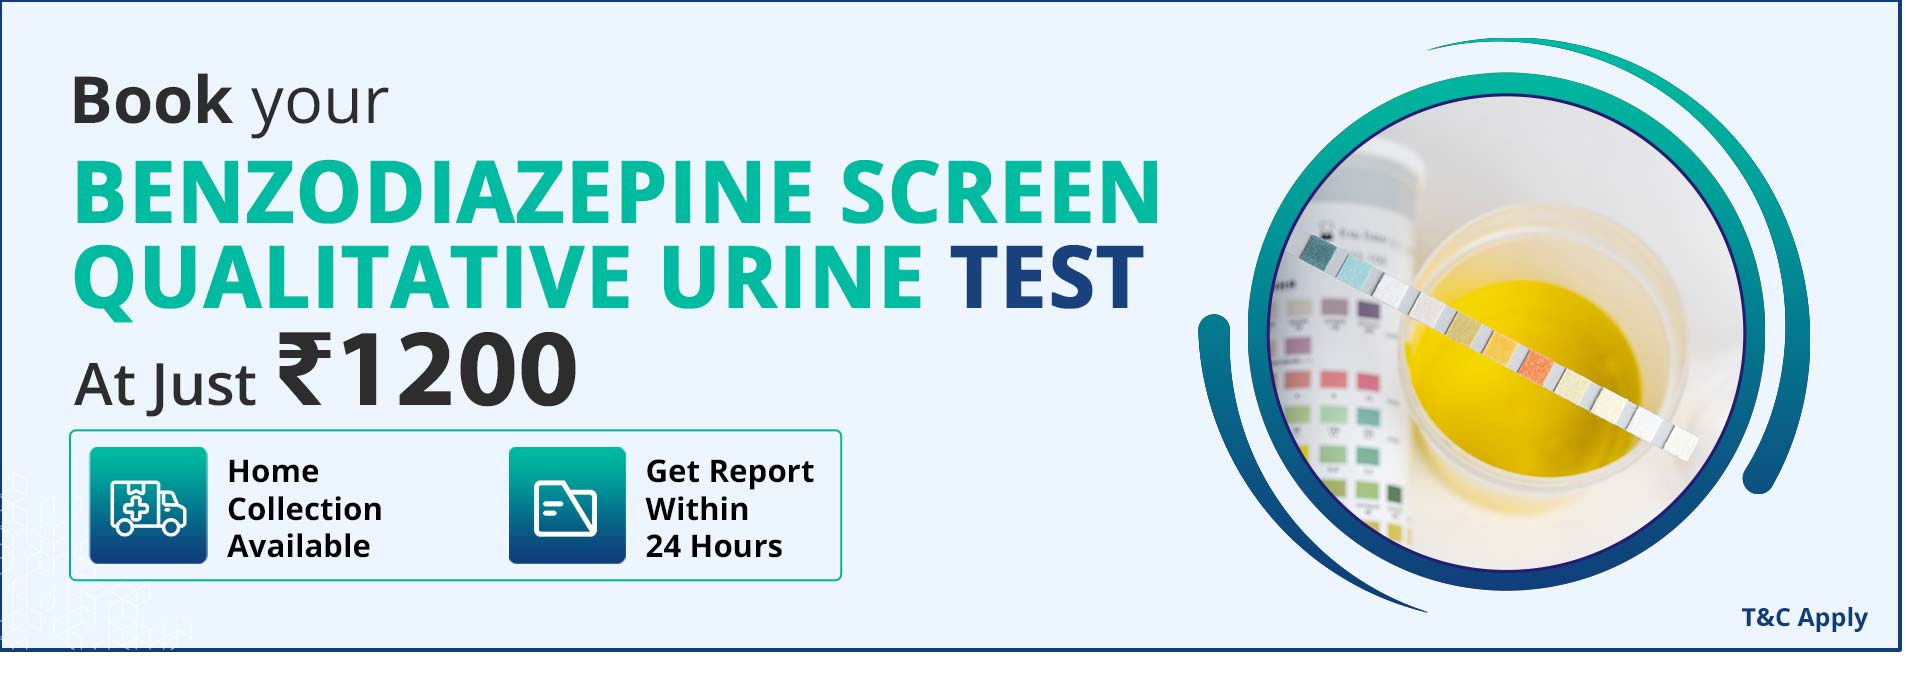 Benzodiazepine Screen Qualitative Urine Test